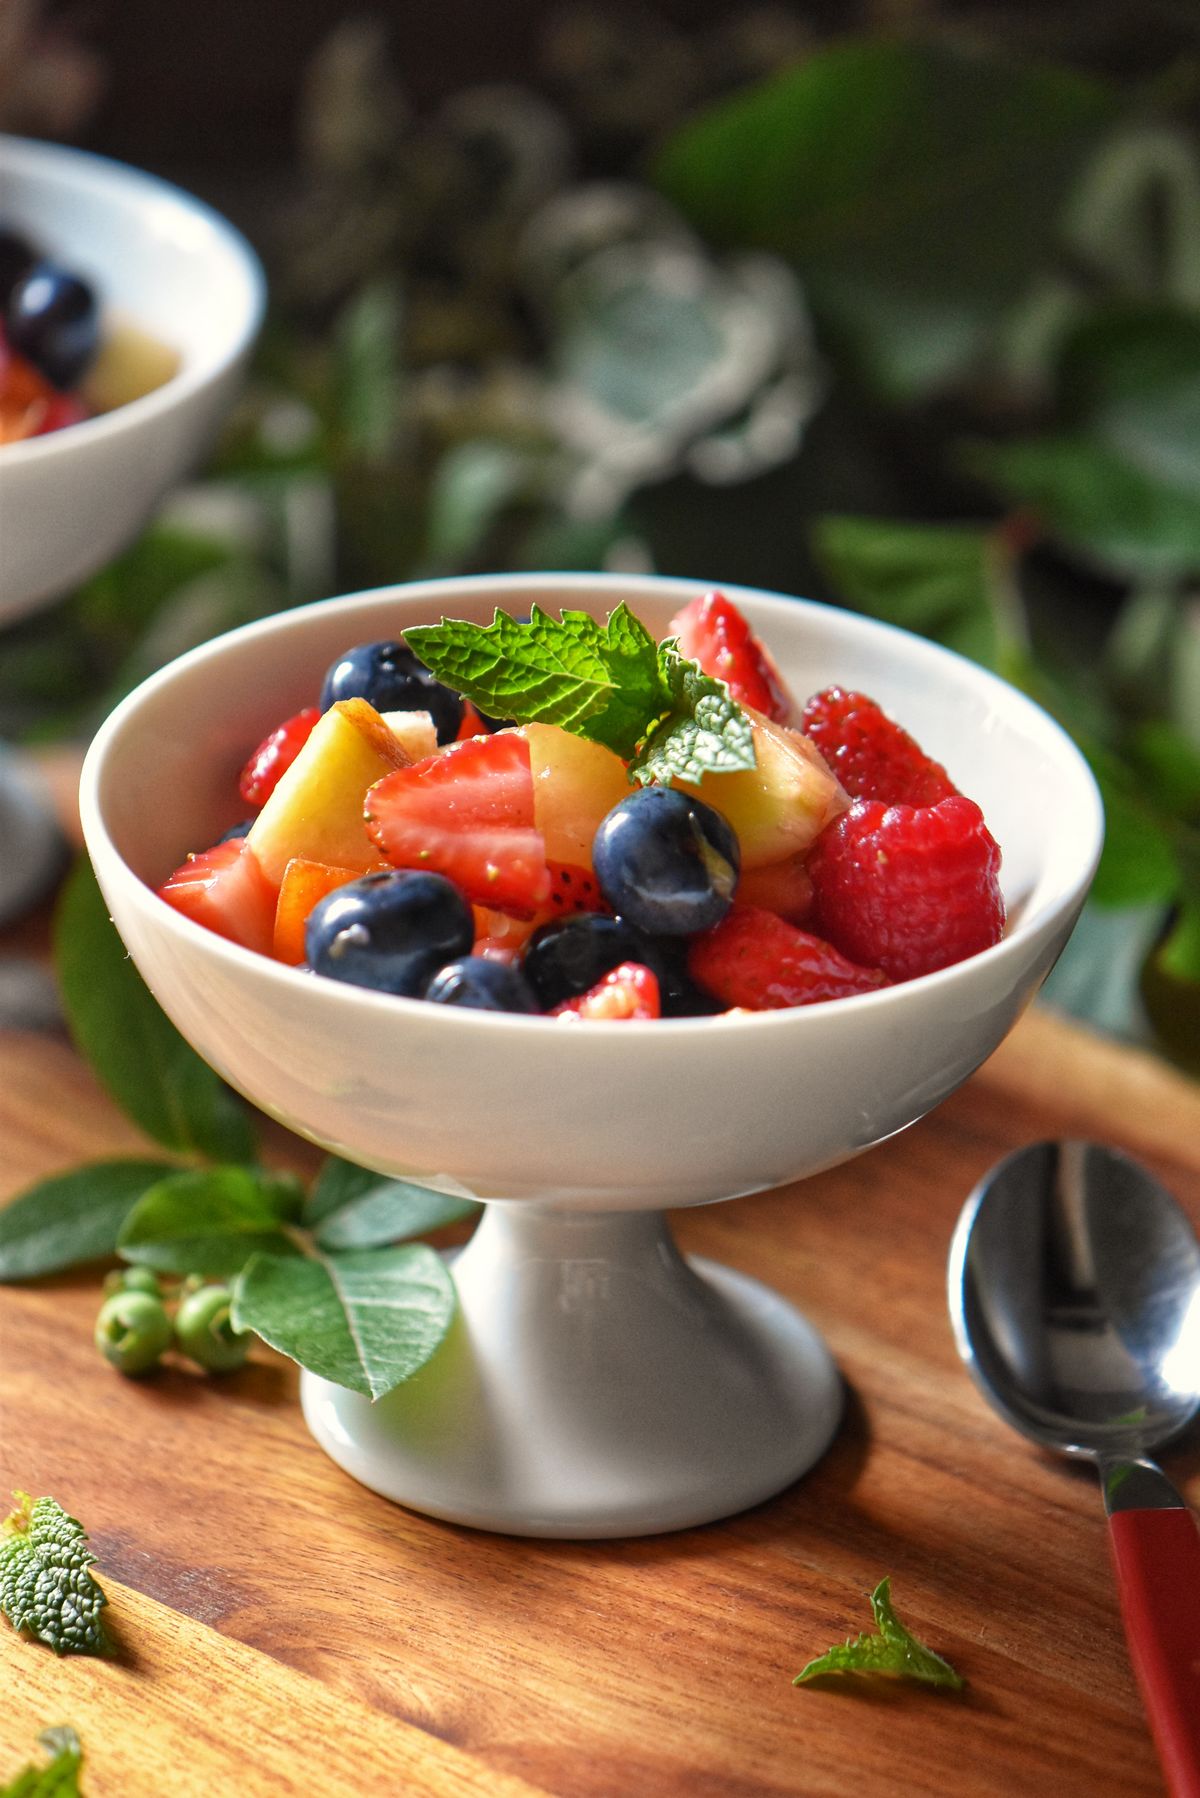 Summer Fruit Salad – Modern Honey